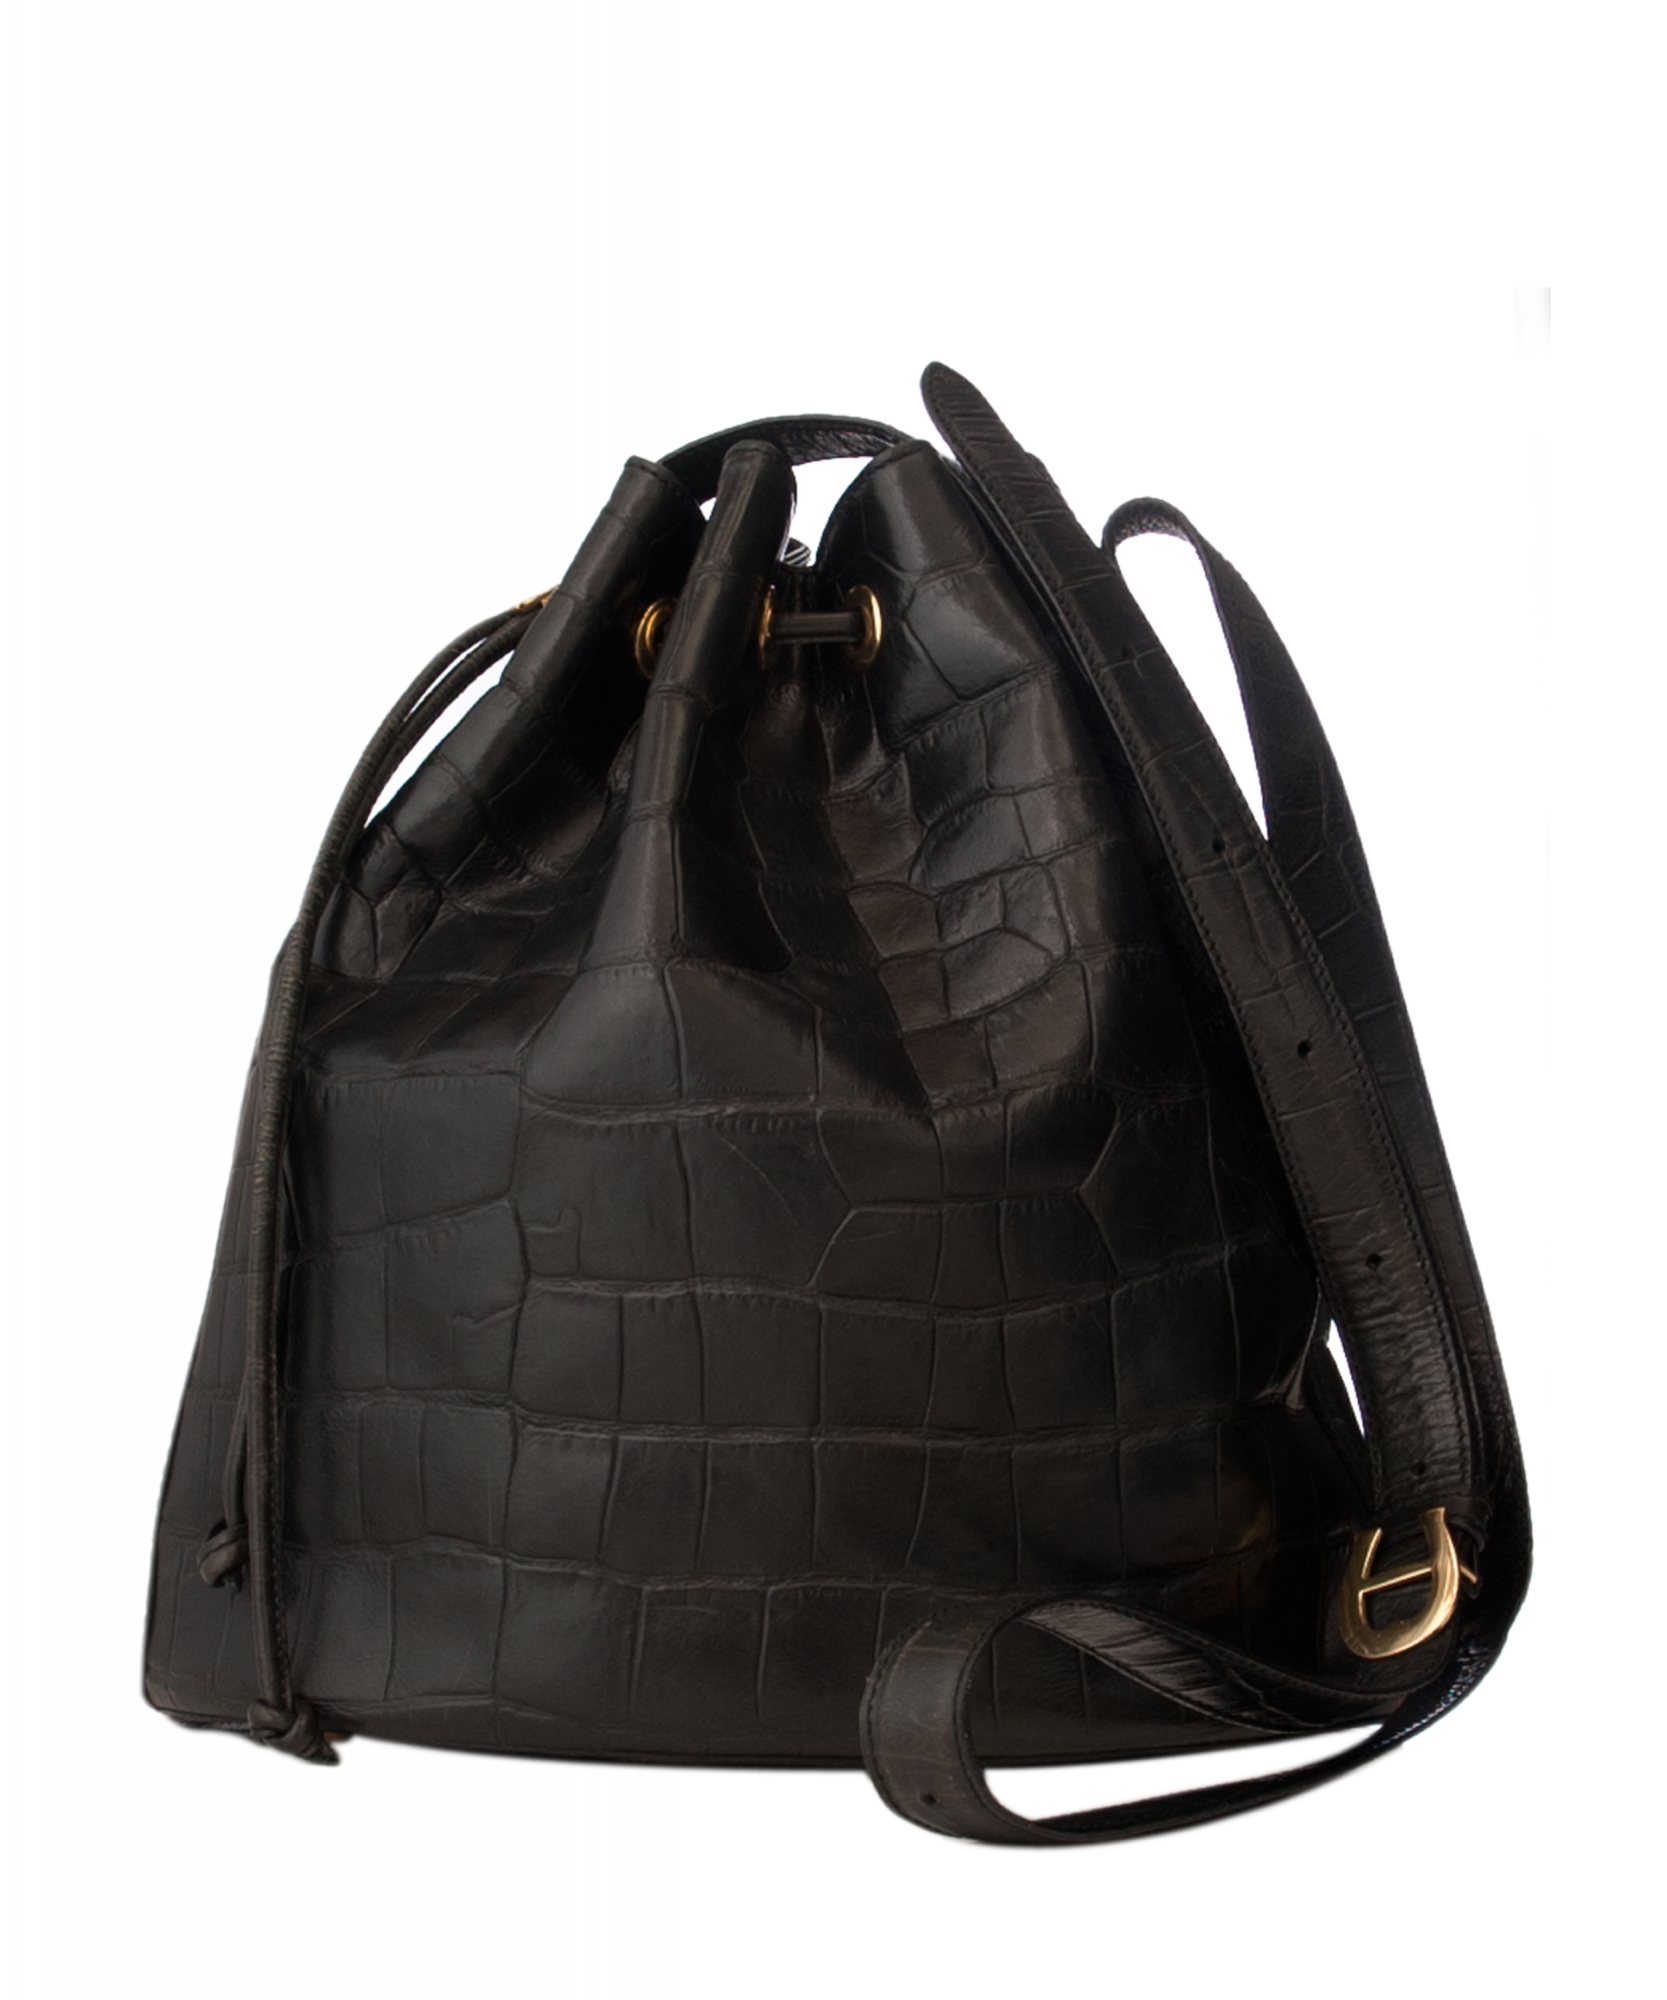 Etienne Aigner Black Leather Croc-Embossed Bucket Bag - Etienne Aigner ...